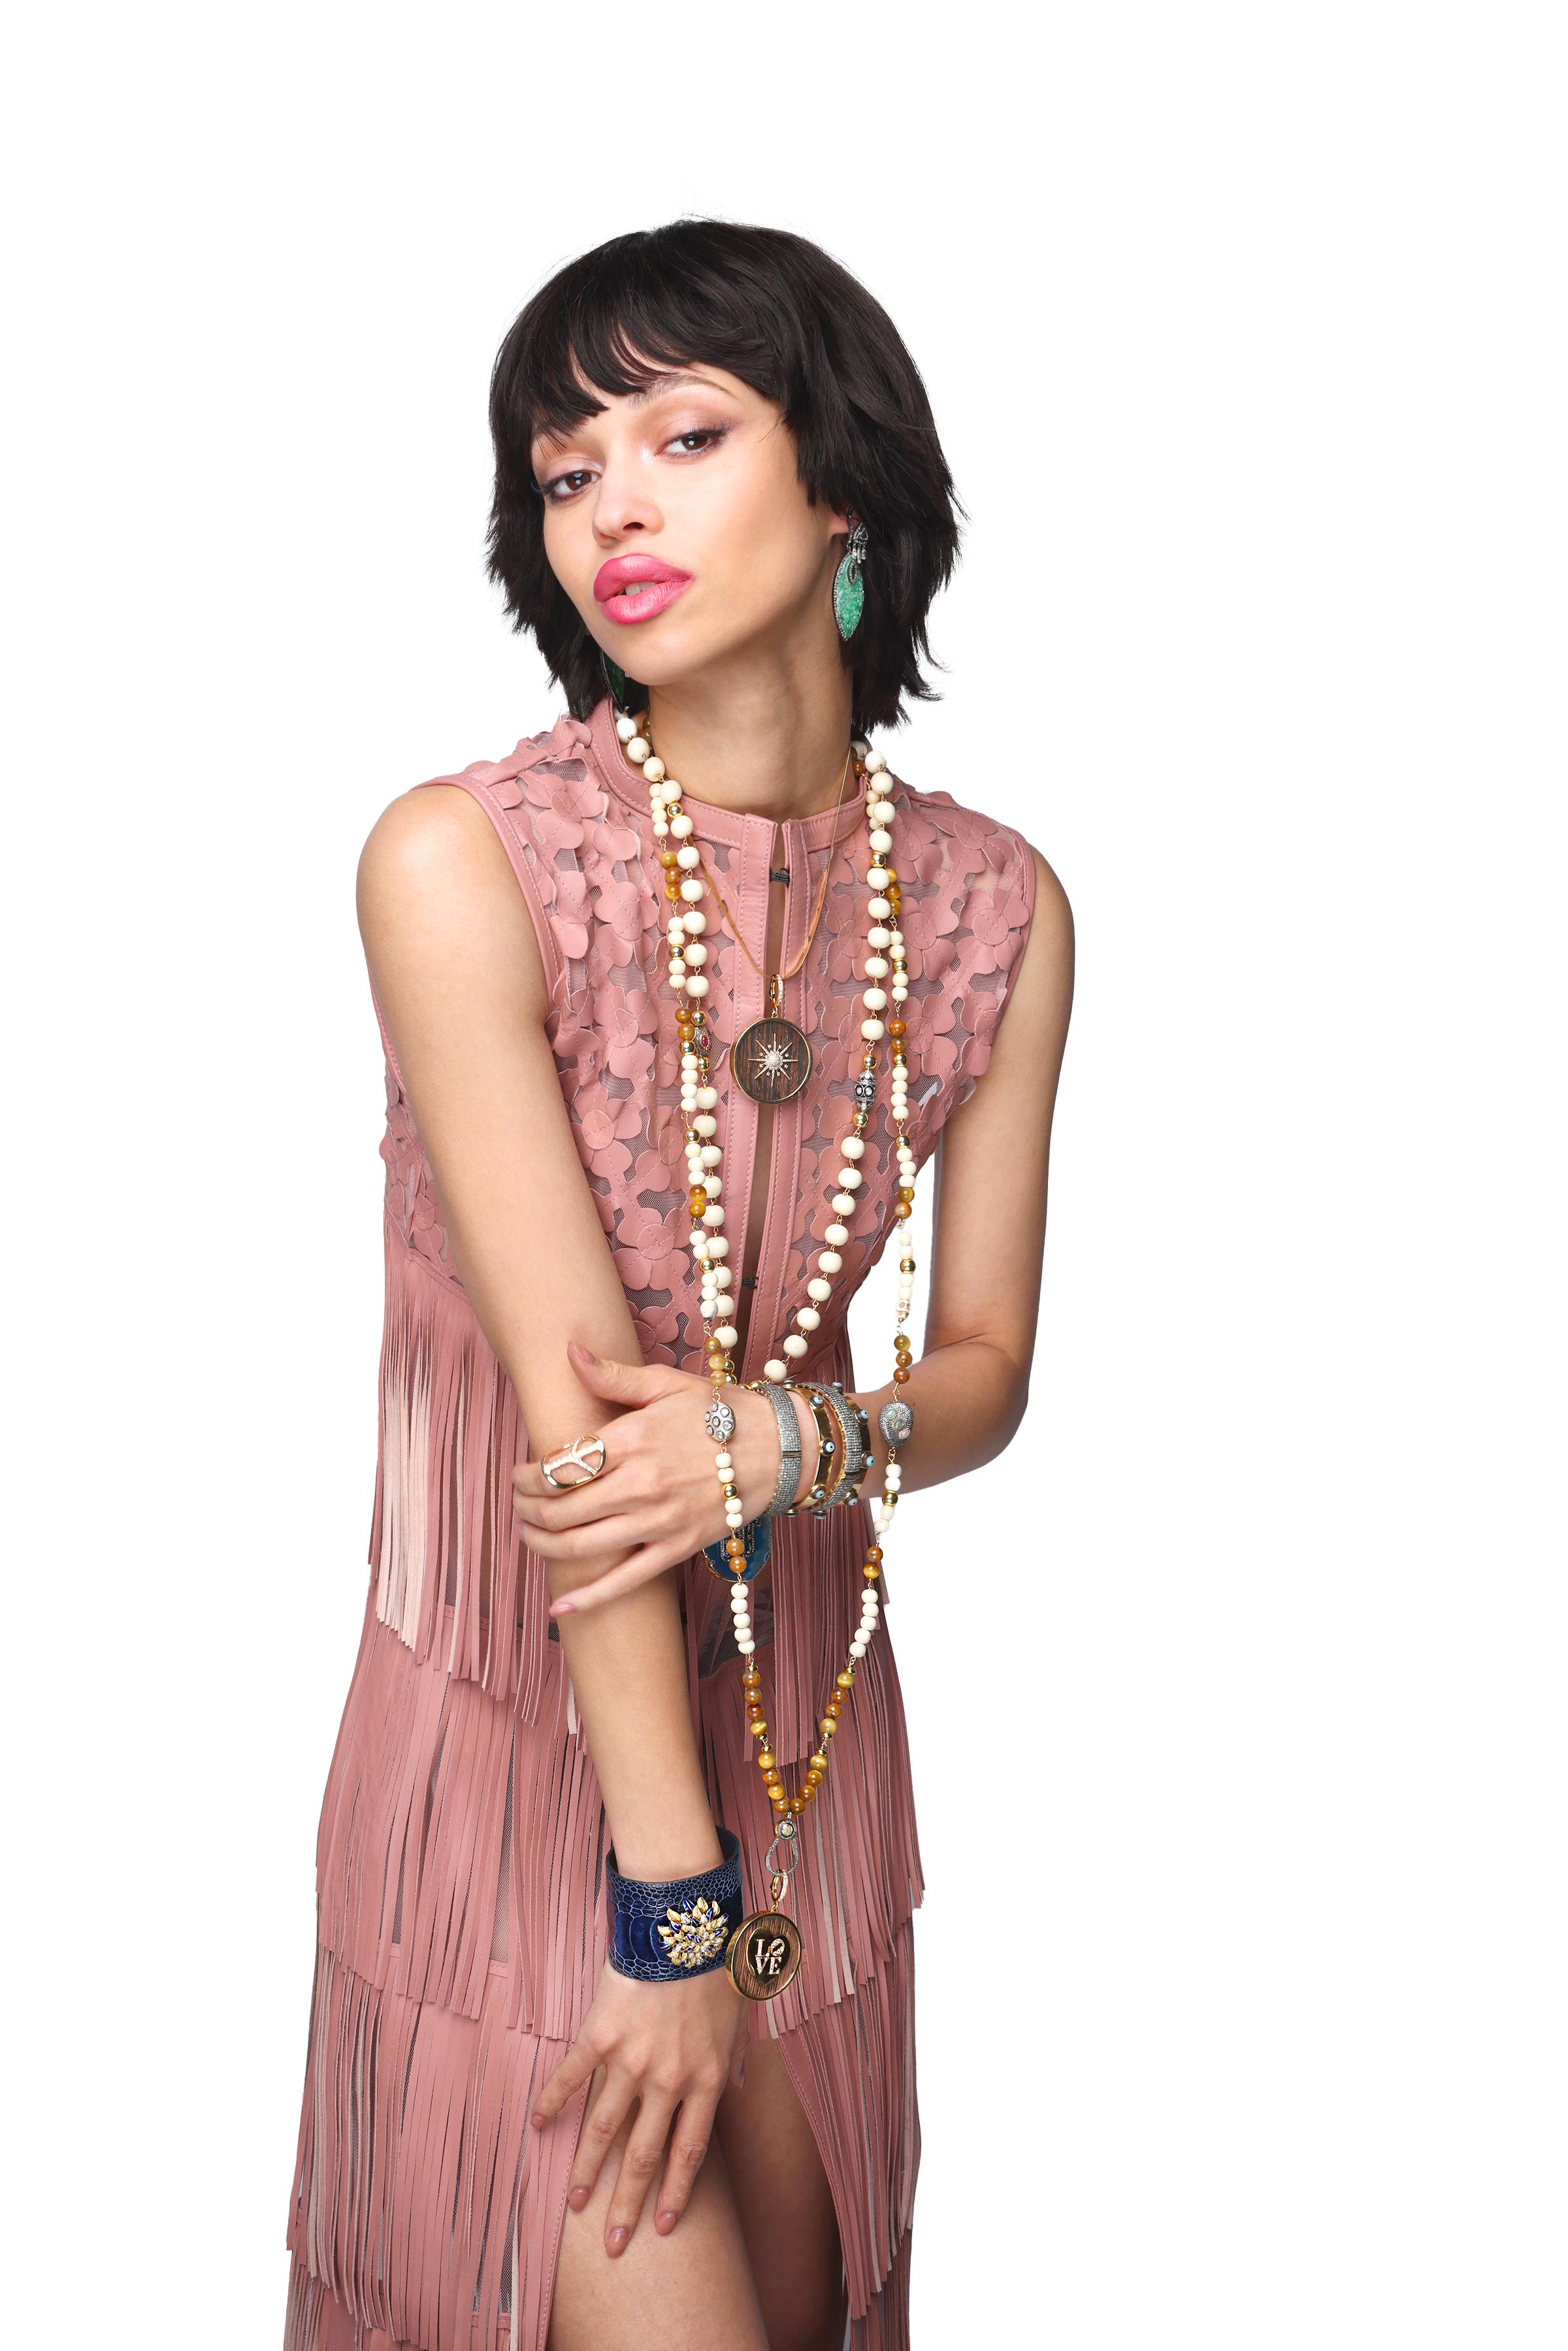 Contemporain Clarissa Bronfman Collier pendentif « Poki » en diamant, os, rubis, péridot, citrine et ébène en vente